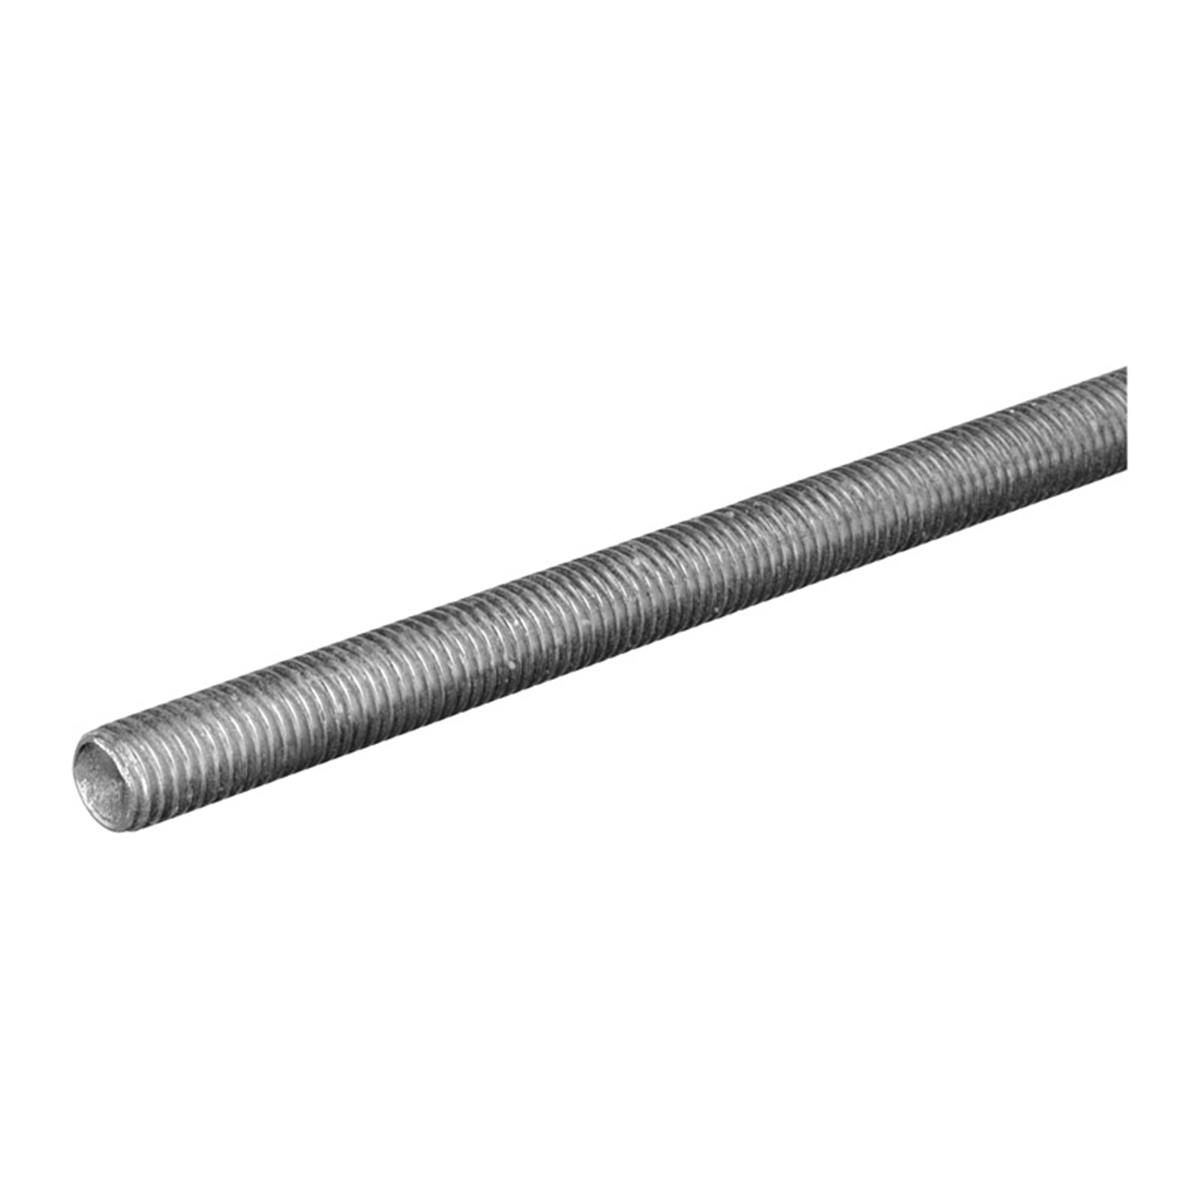 78906 8-32 In. X 1 Ft. Zinc-plated Steel Threaded Rod